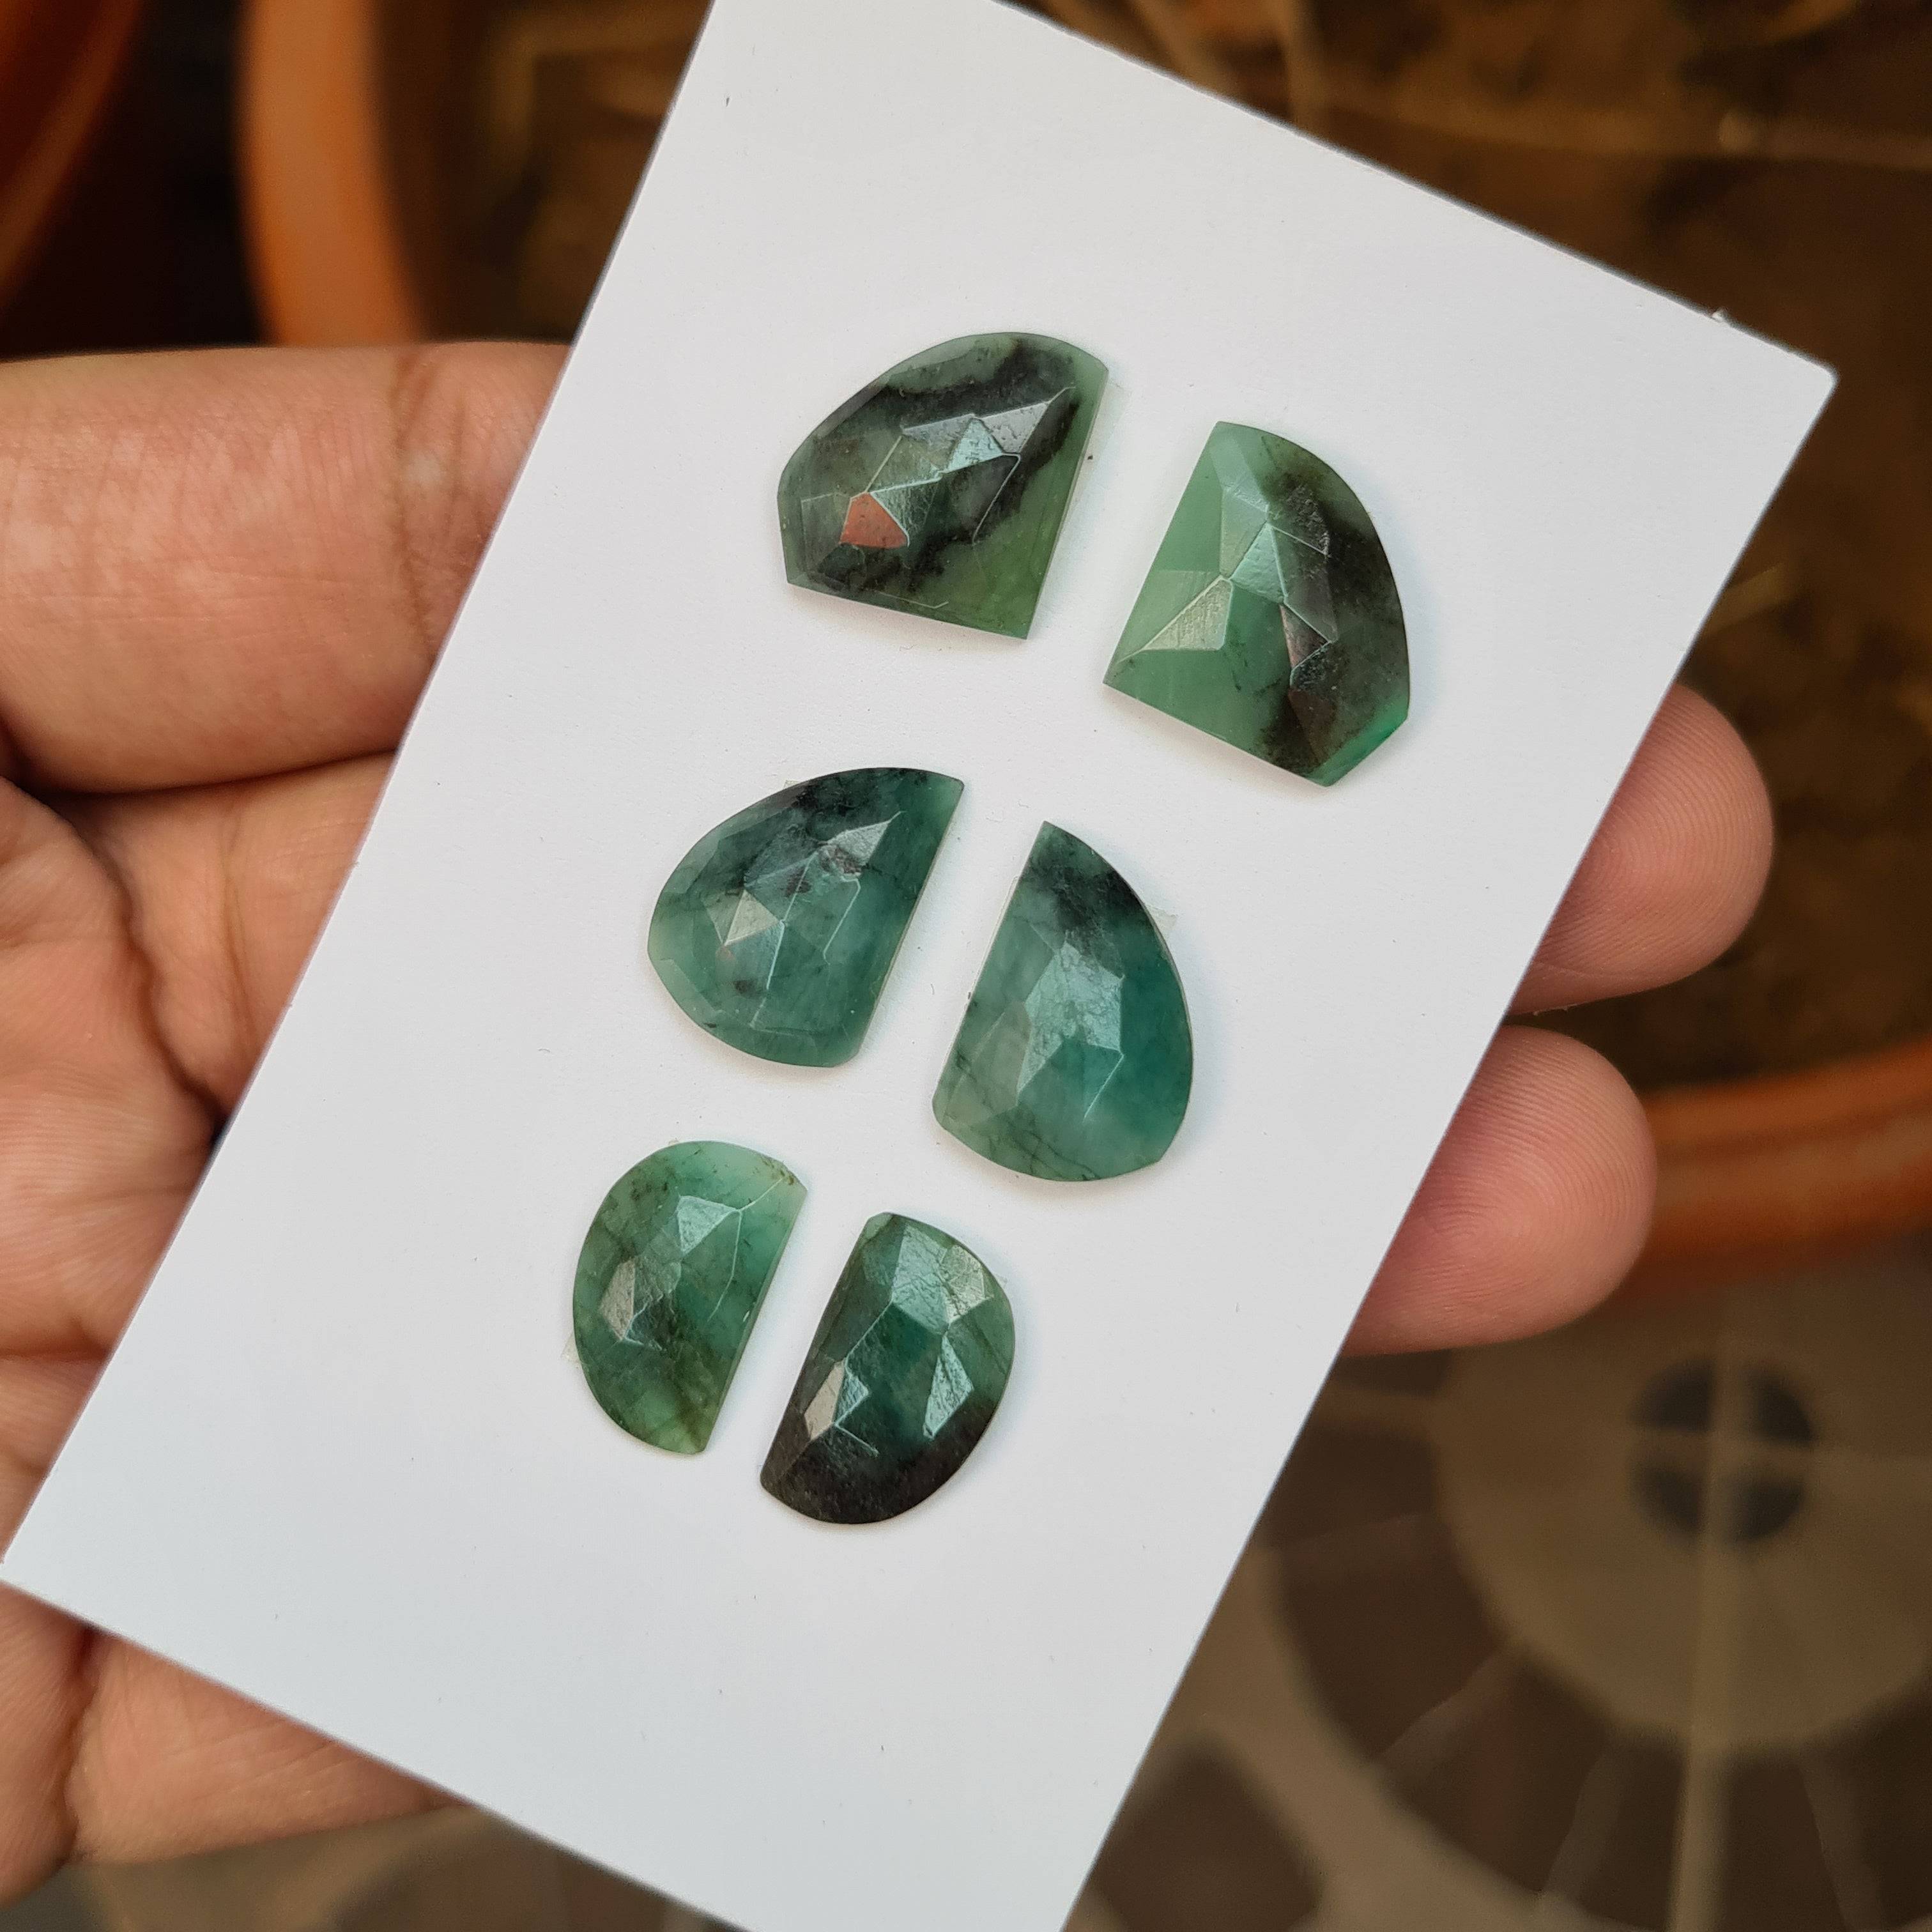 6 pcs Pcs Mozambique Natural Emerald Stone Pairs with Flat backs |Fancy shape15-17mm Size - The LabradoriteKing